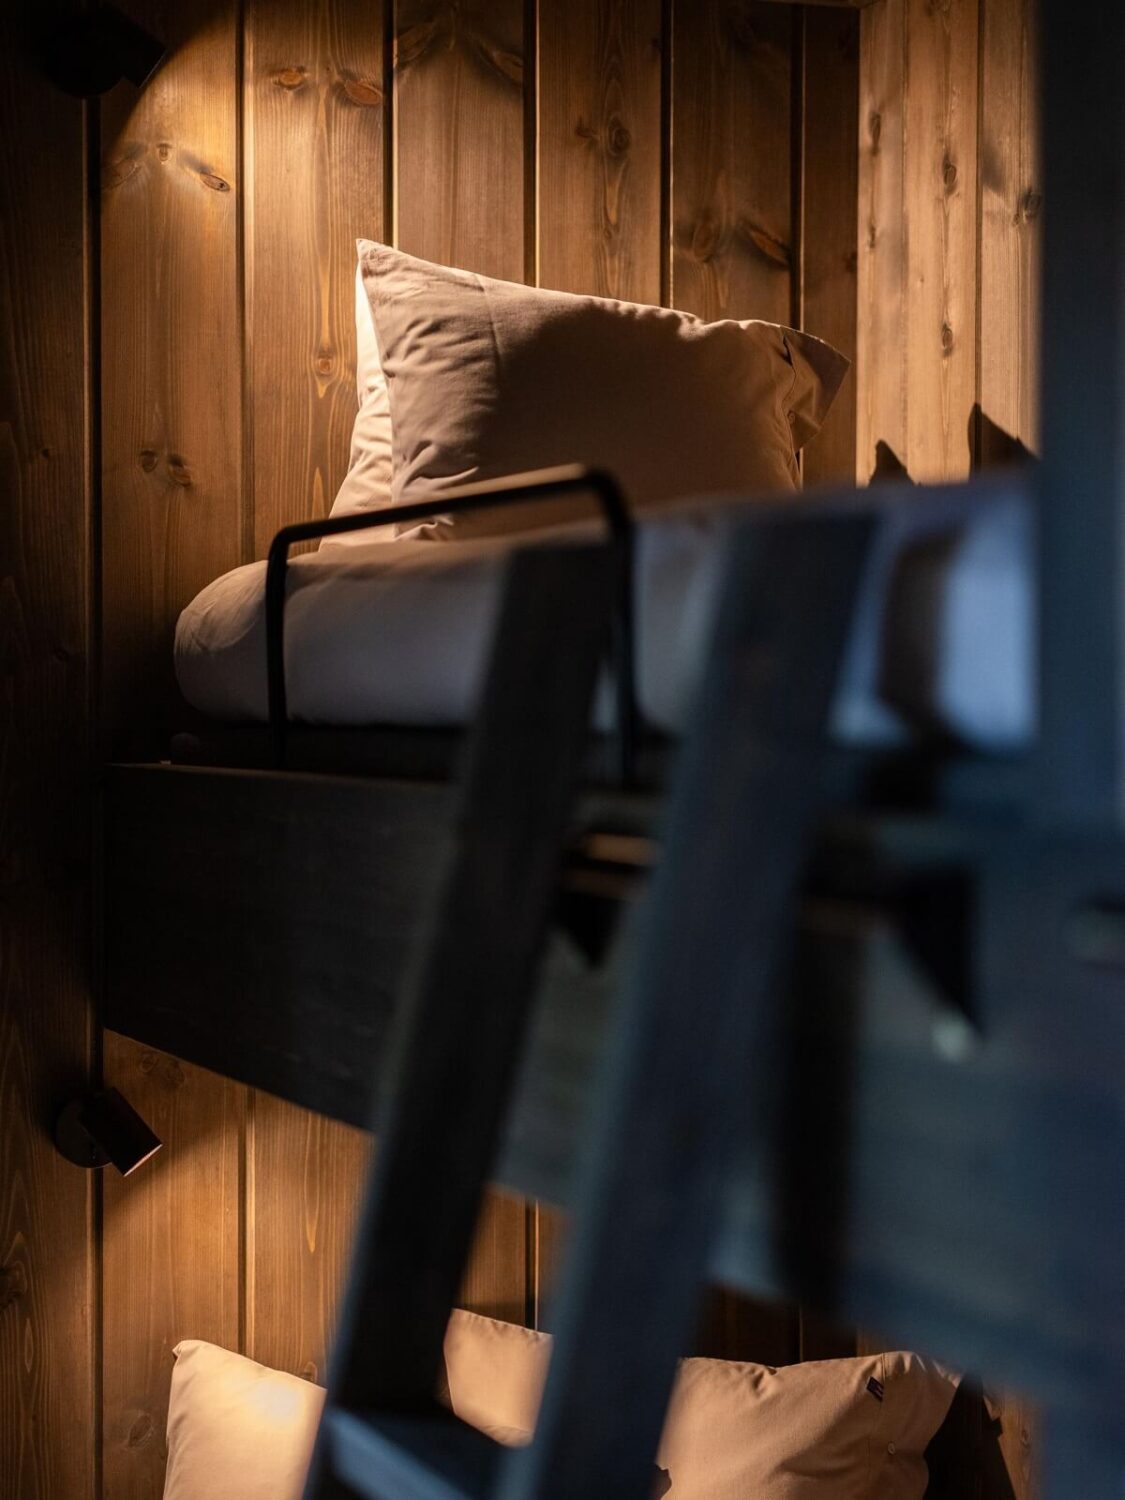 log-house-bunk-bed-detail-nordroom